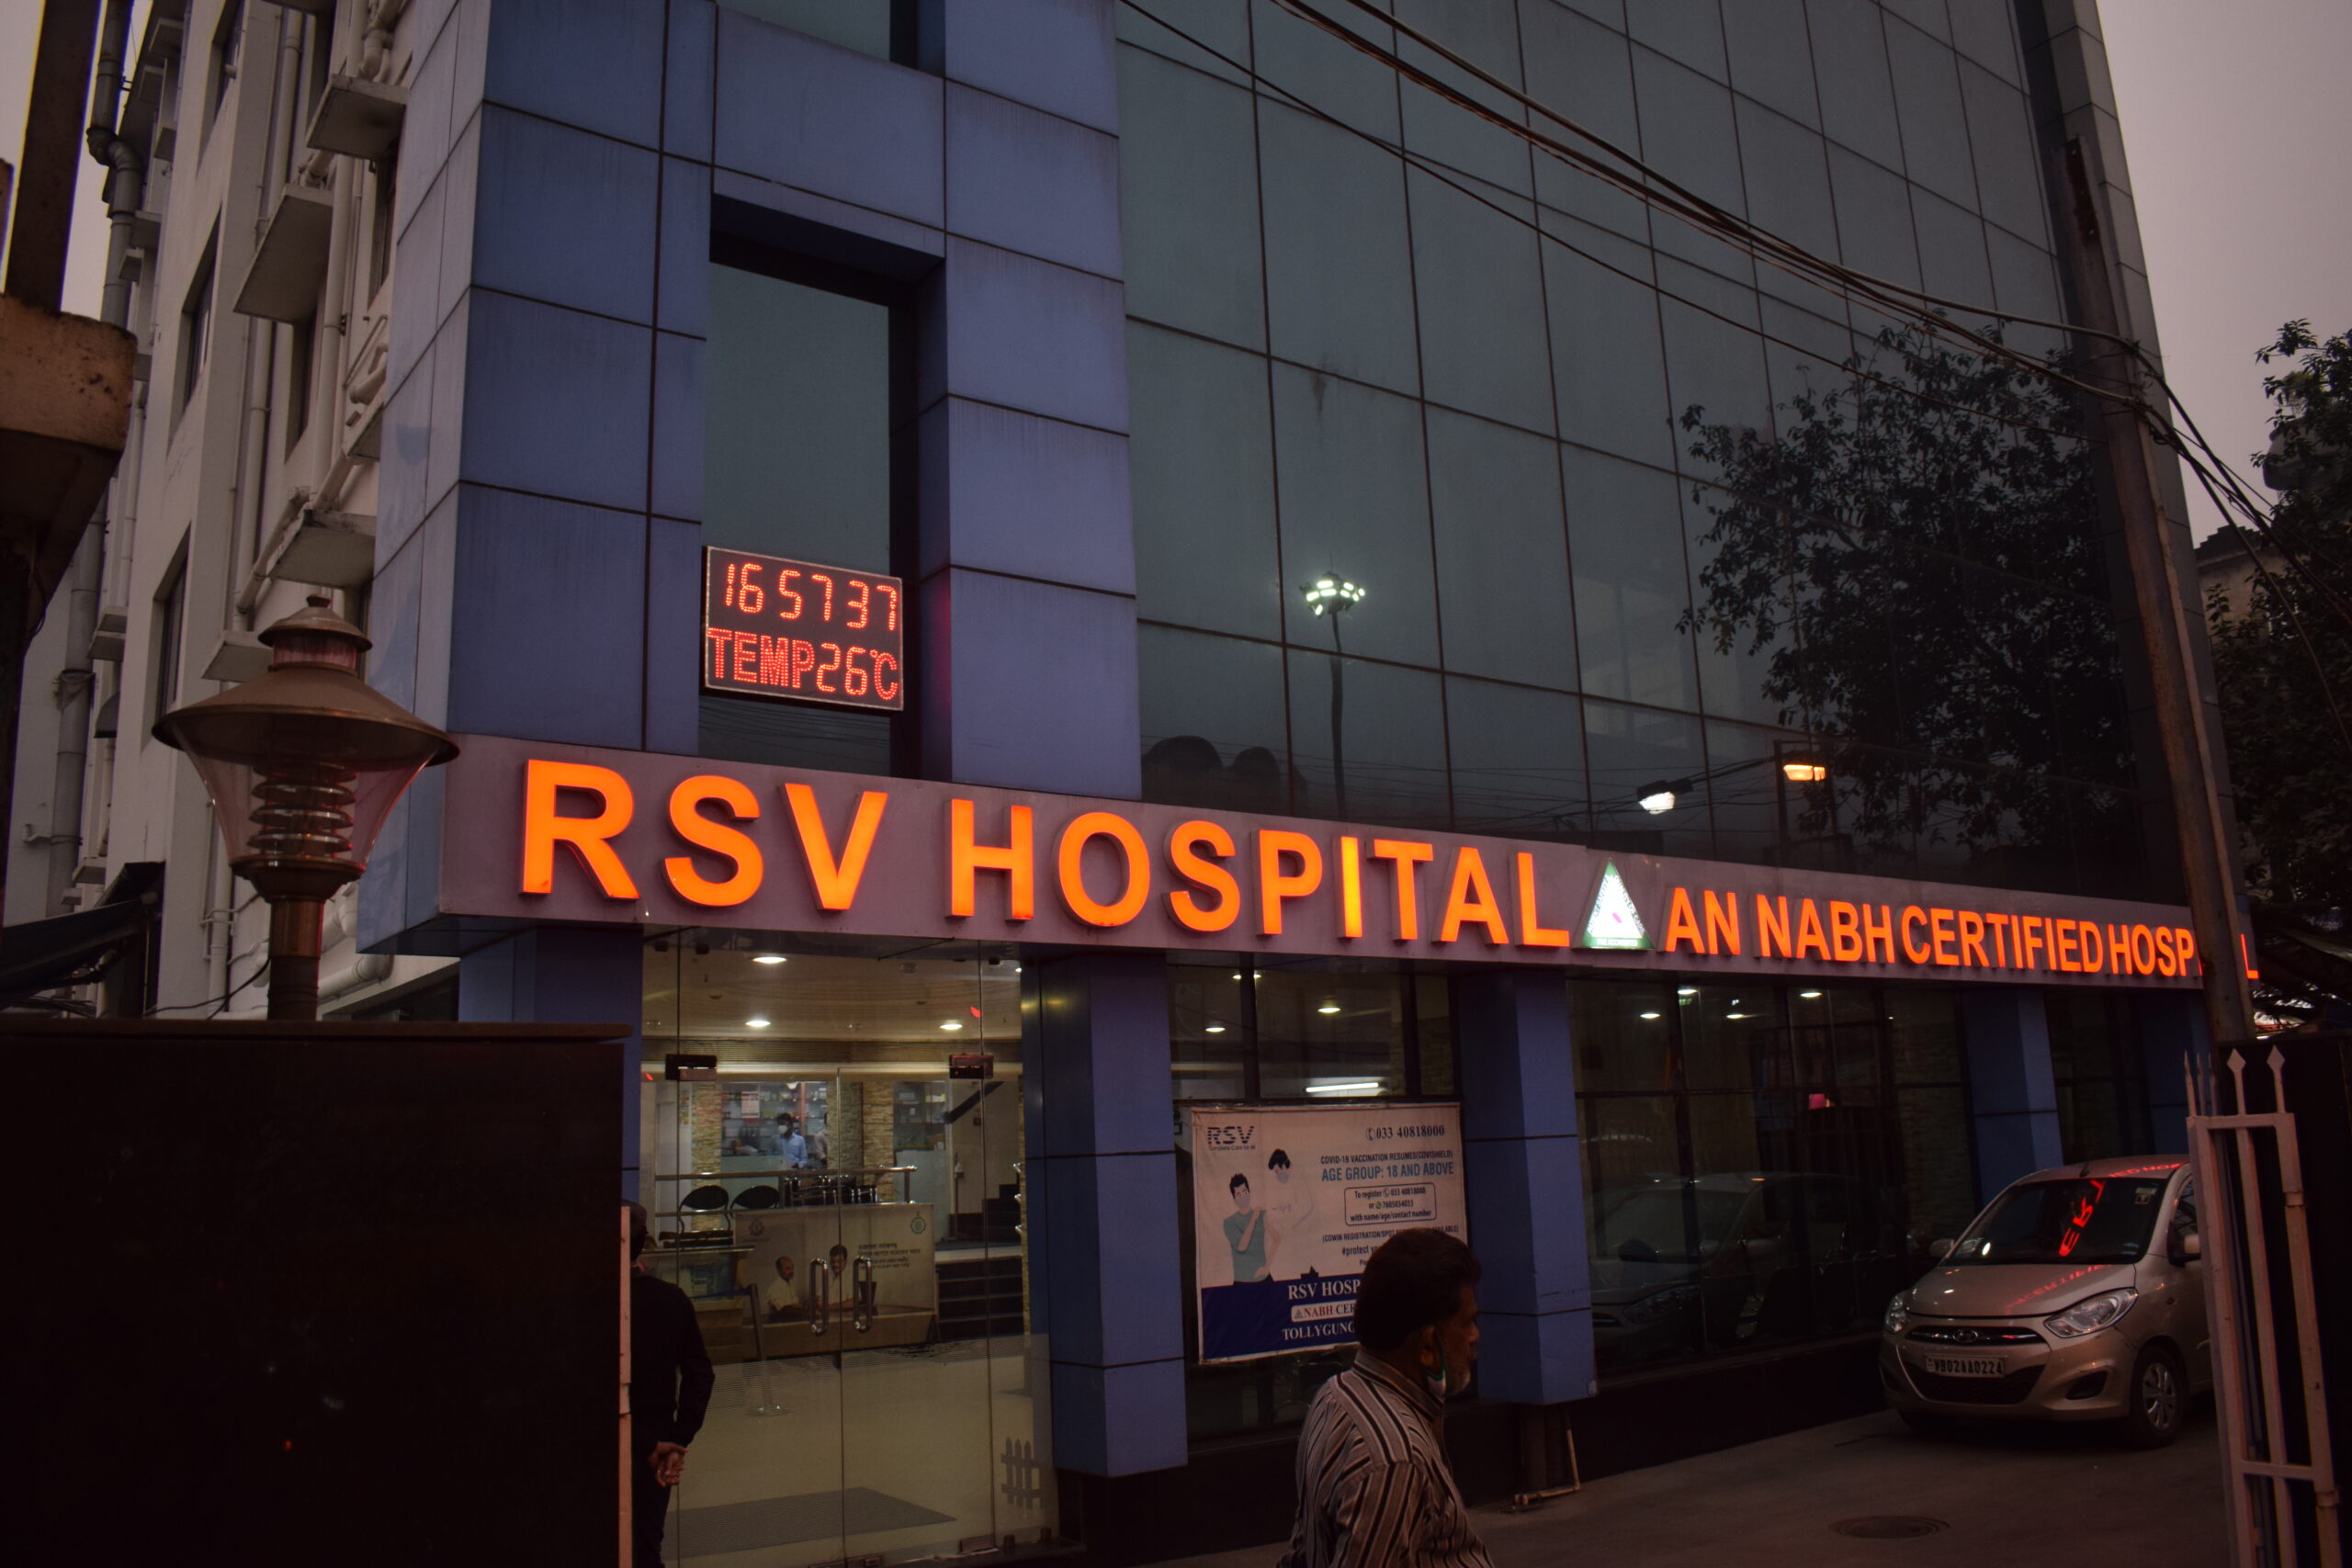 RSV HOSPITAL